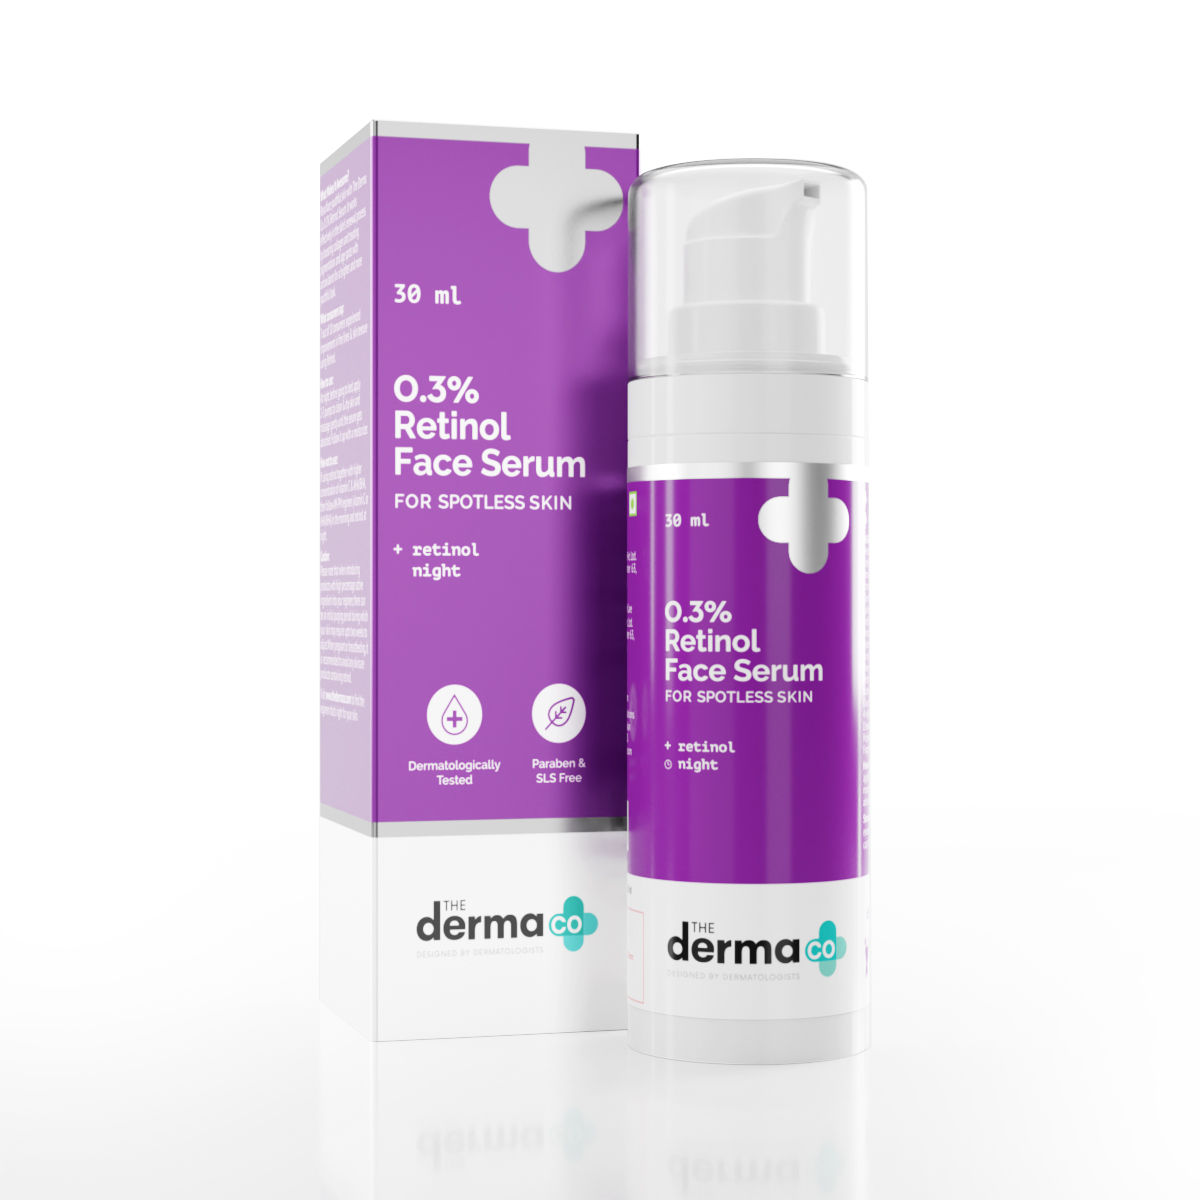 The Derma Co. 0.3% Retinol Face Serum For Spotless Skin